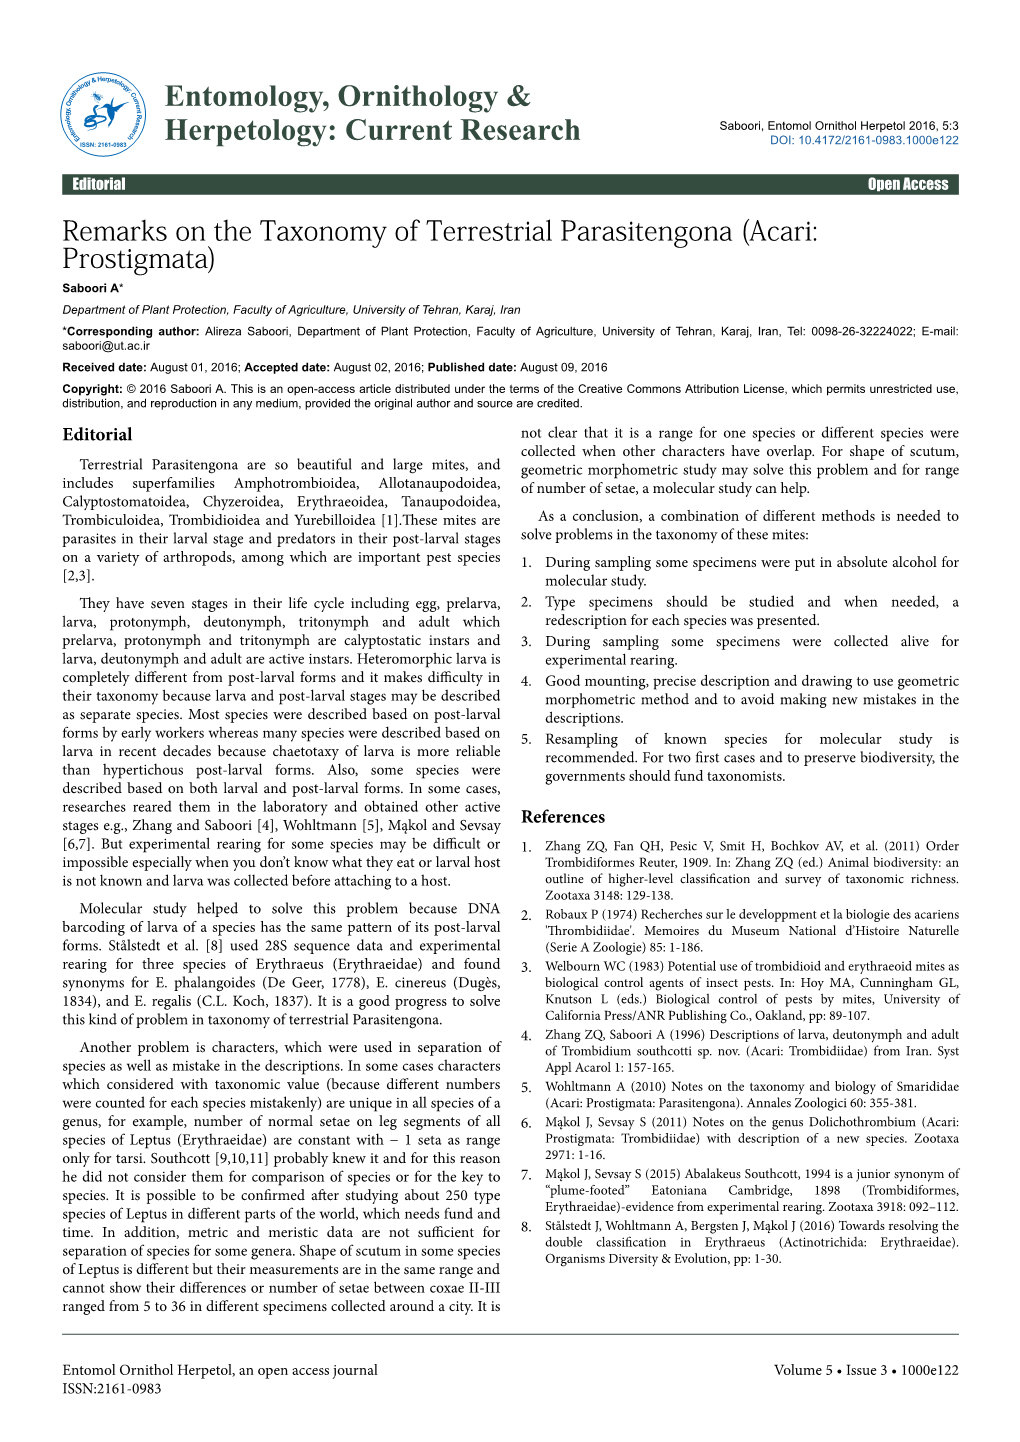 Remarks on the Taxonomy of Terrestrial Parasitengona (Acari